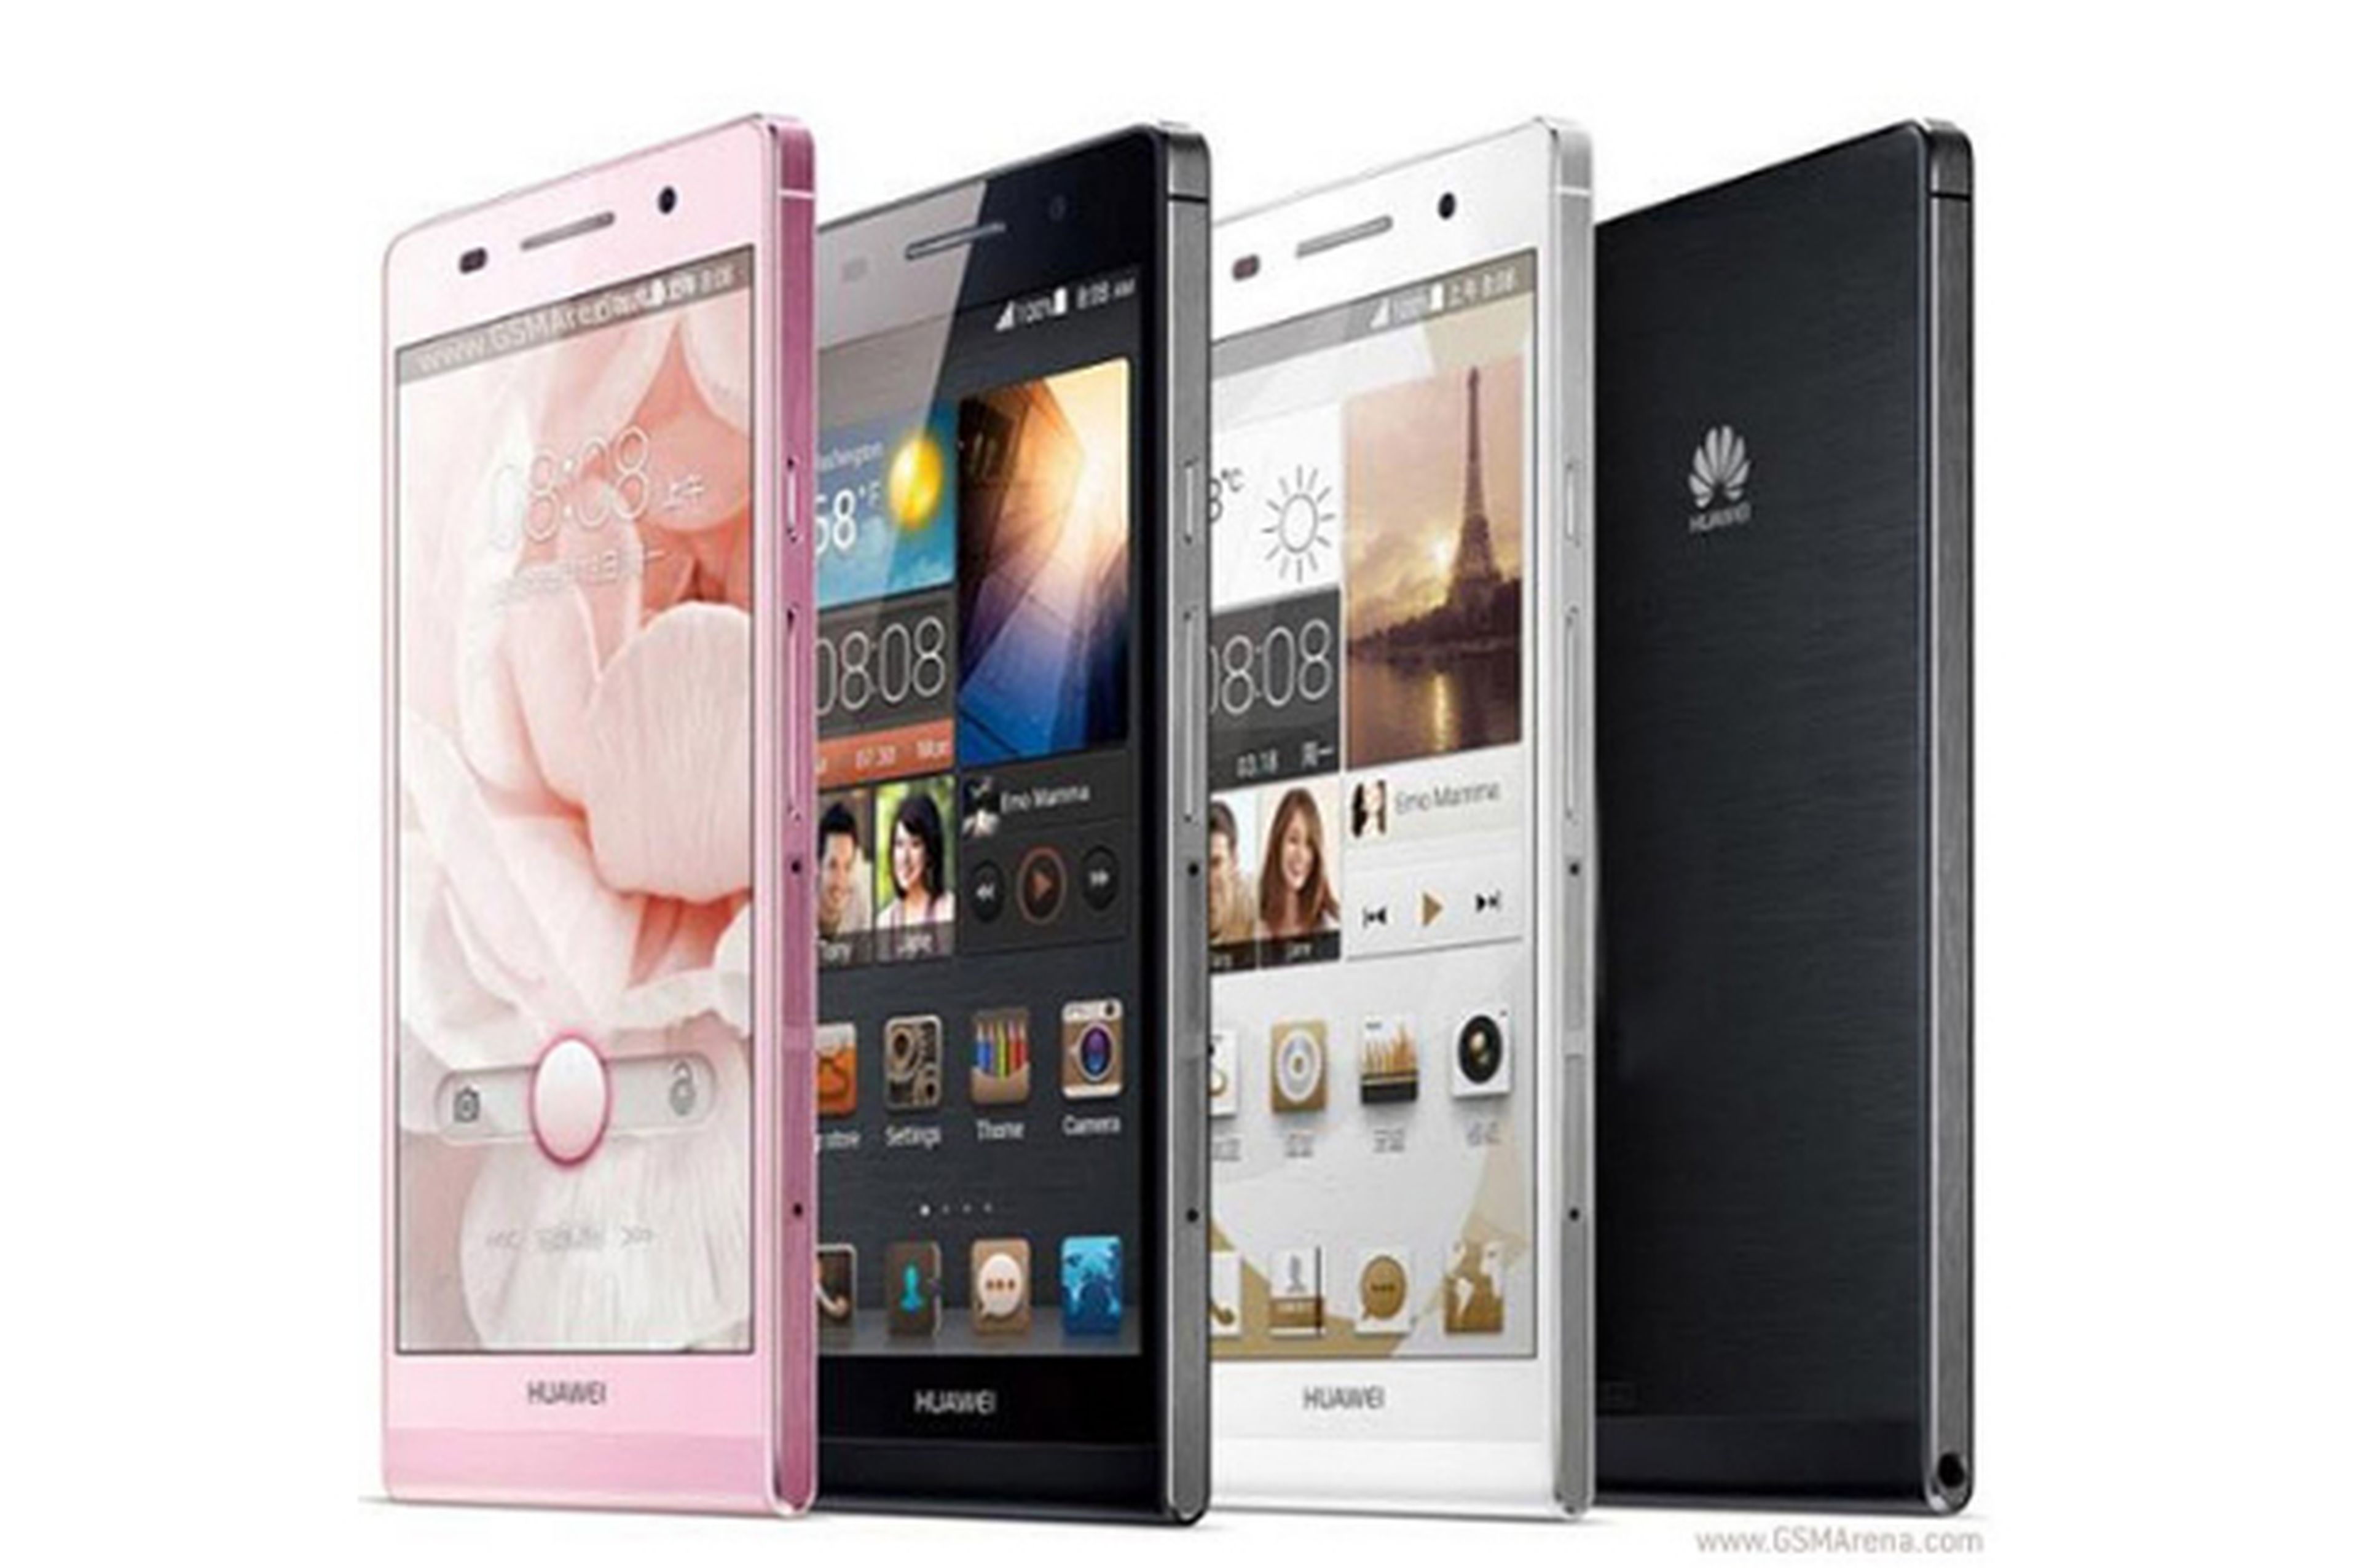 Huawei Ascend P6, nuevo smartphone Android para la gama alta